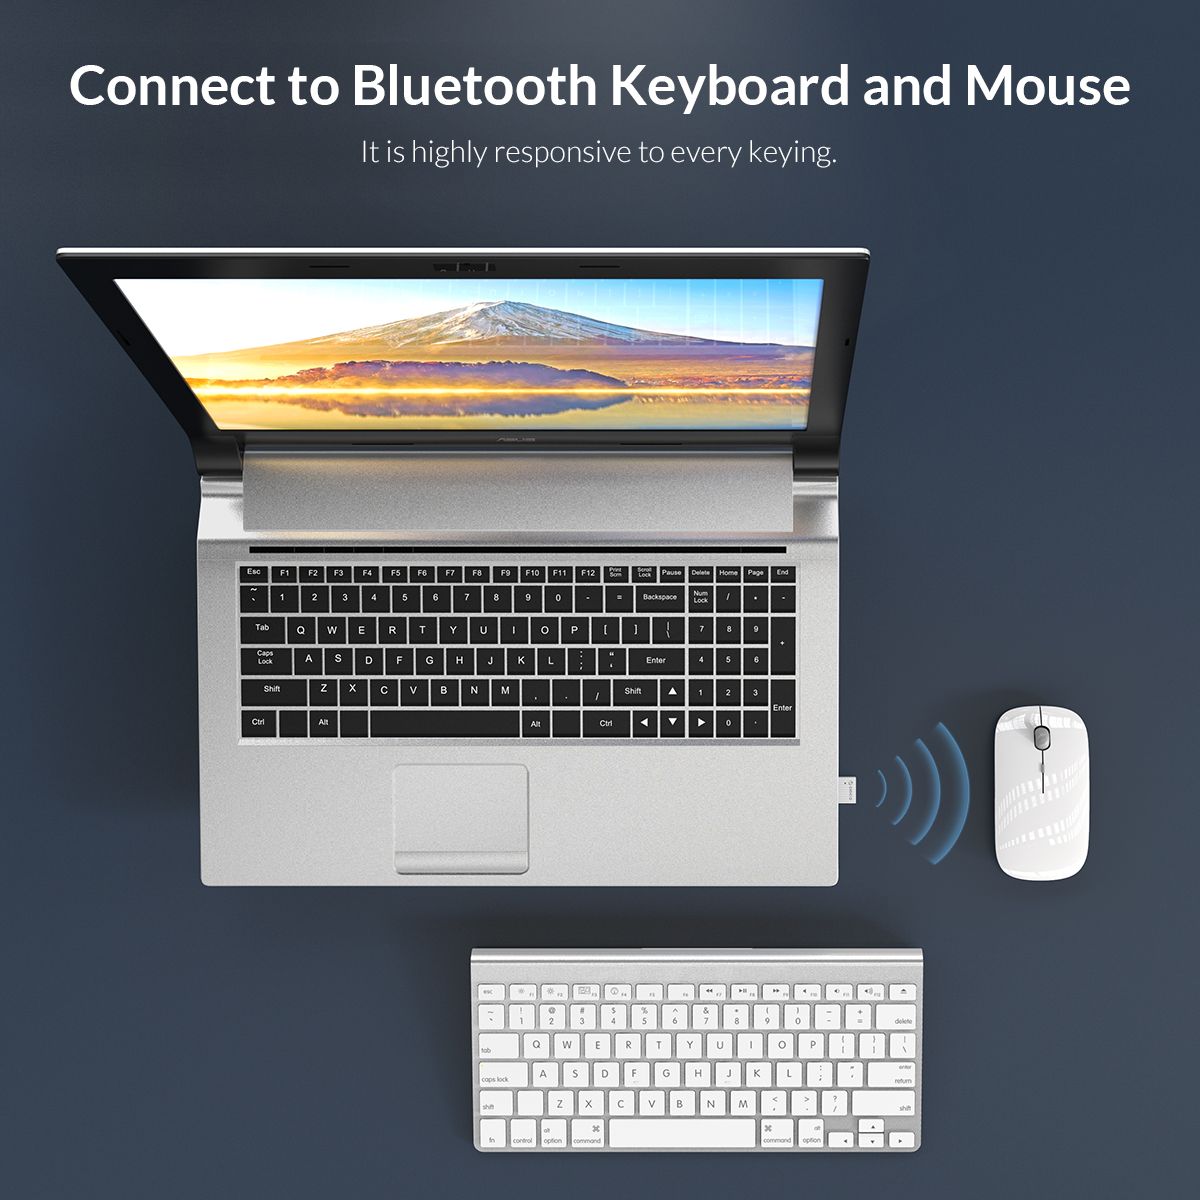 5.0 Bluetooth Adapter-奥睿科官网